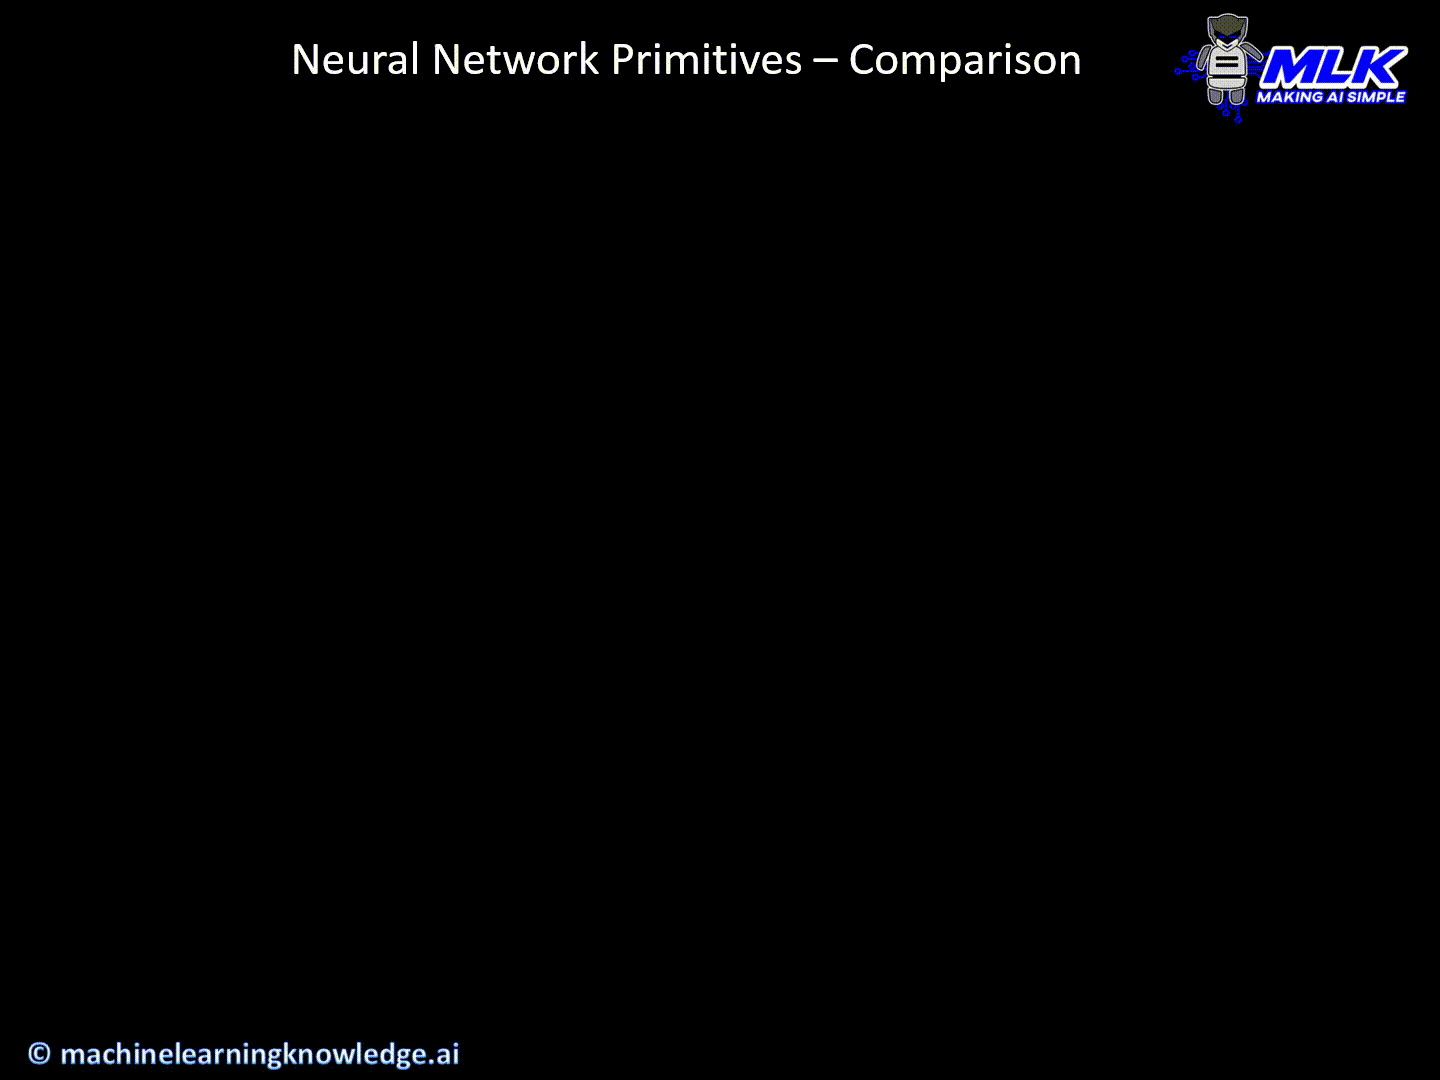 McCulloch Pitts Neuron vs Perceptron vs Sigmooid Neuron